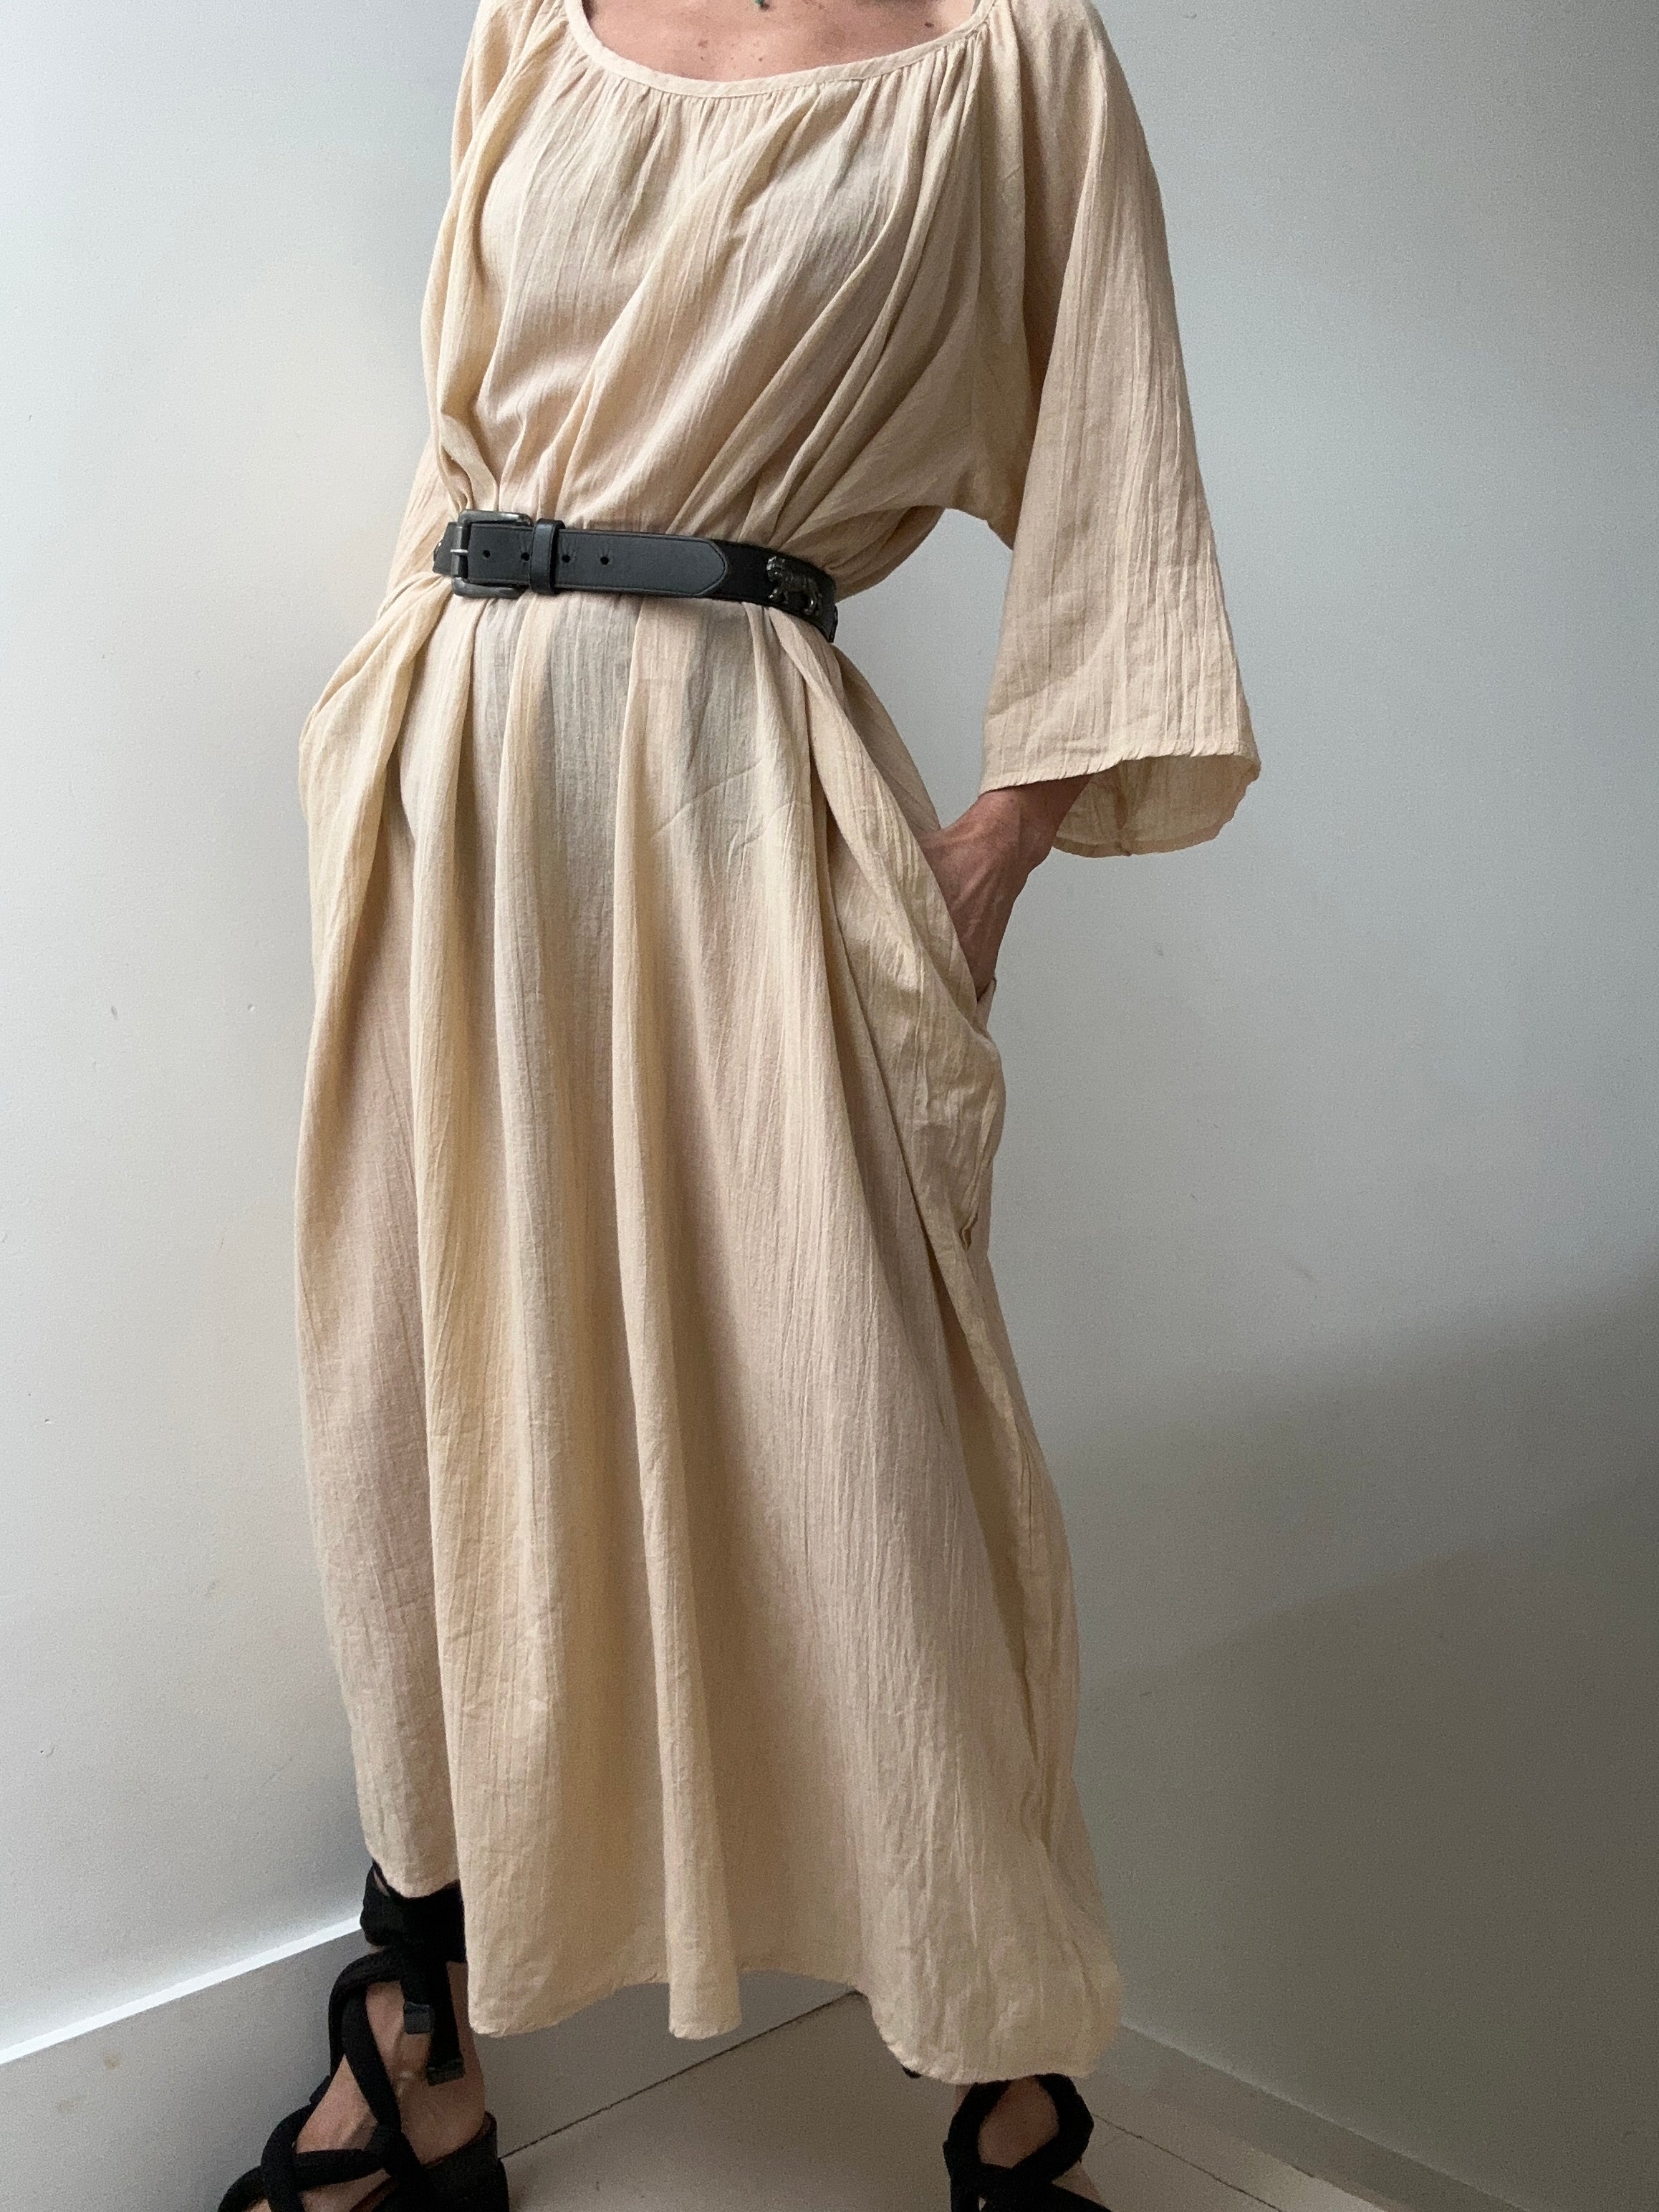 Jetsetbohemian Dresses One Size Round Neck Cotton Dress in Biege